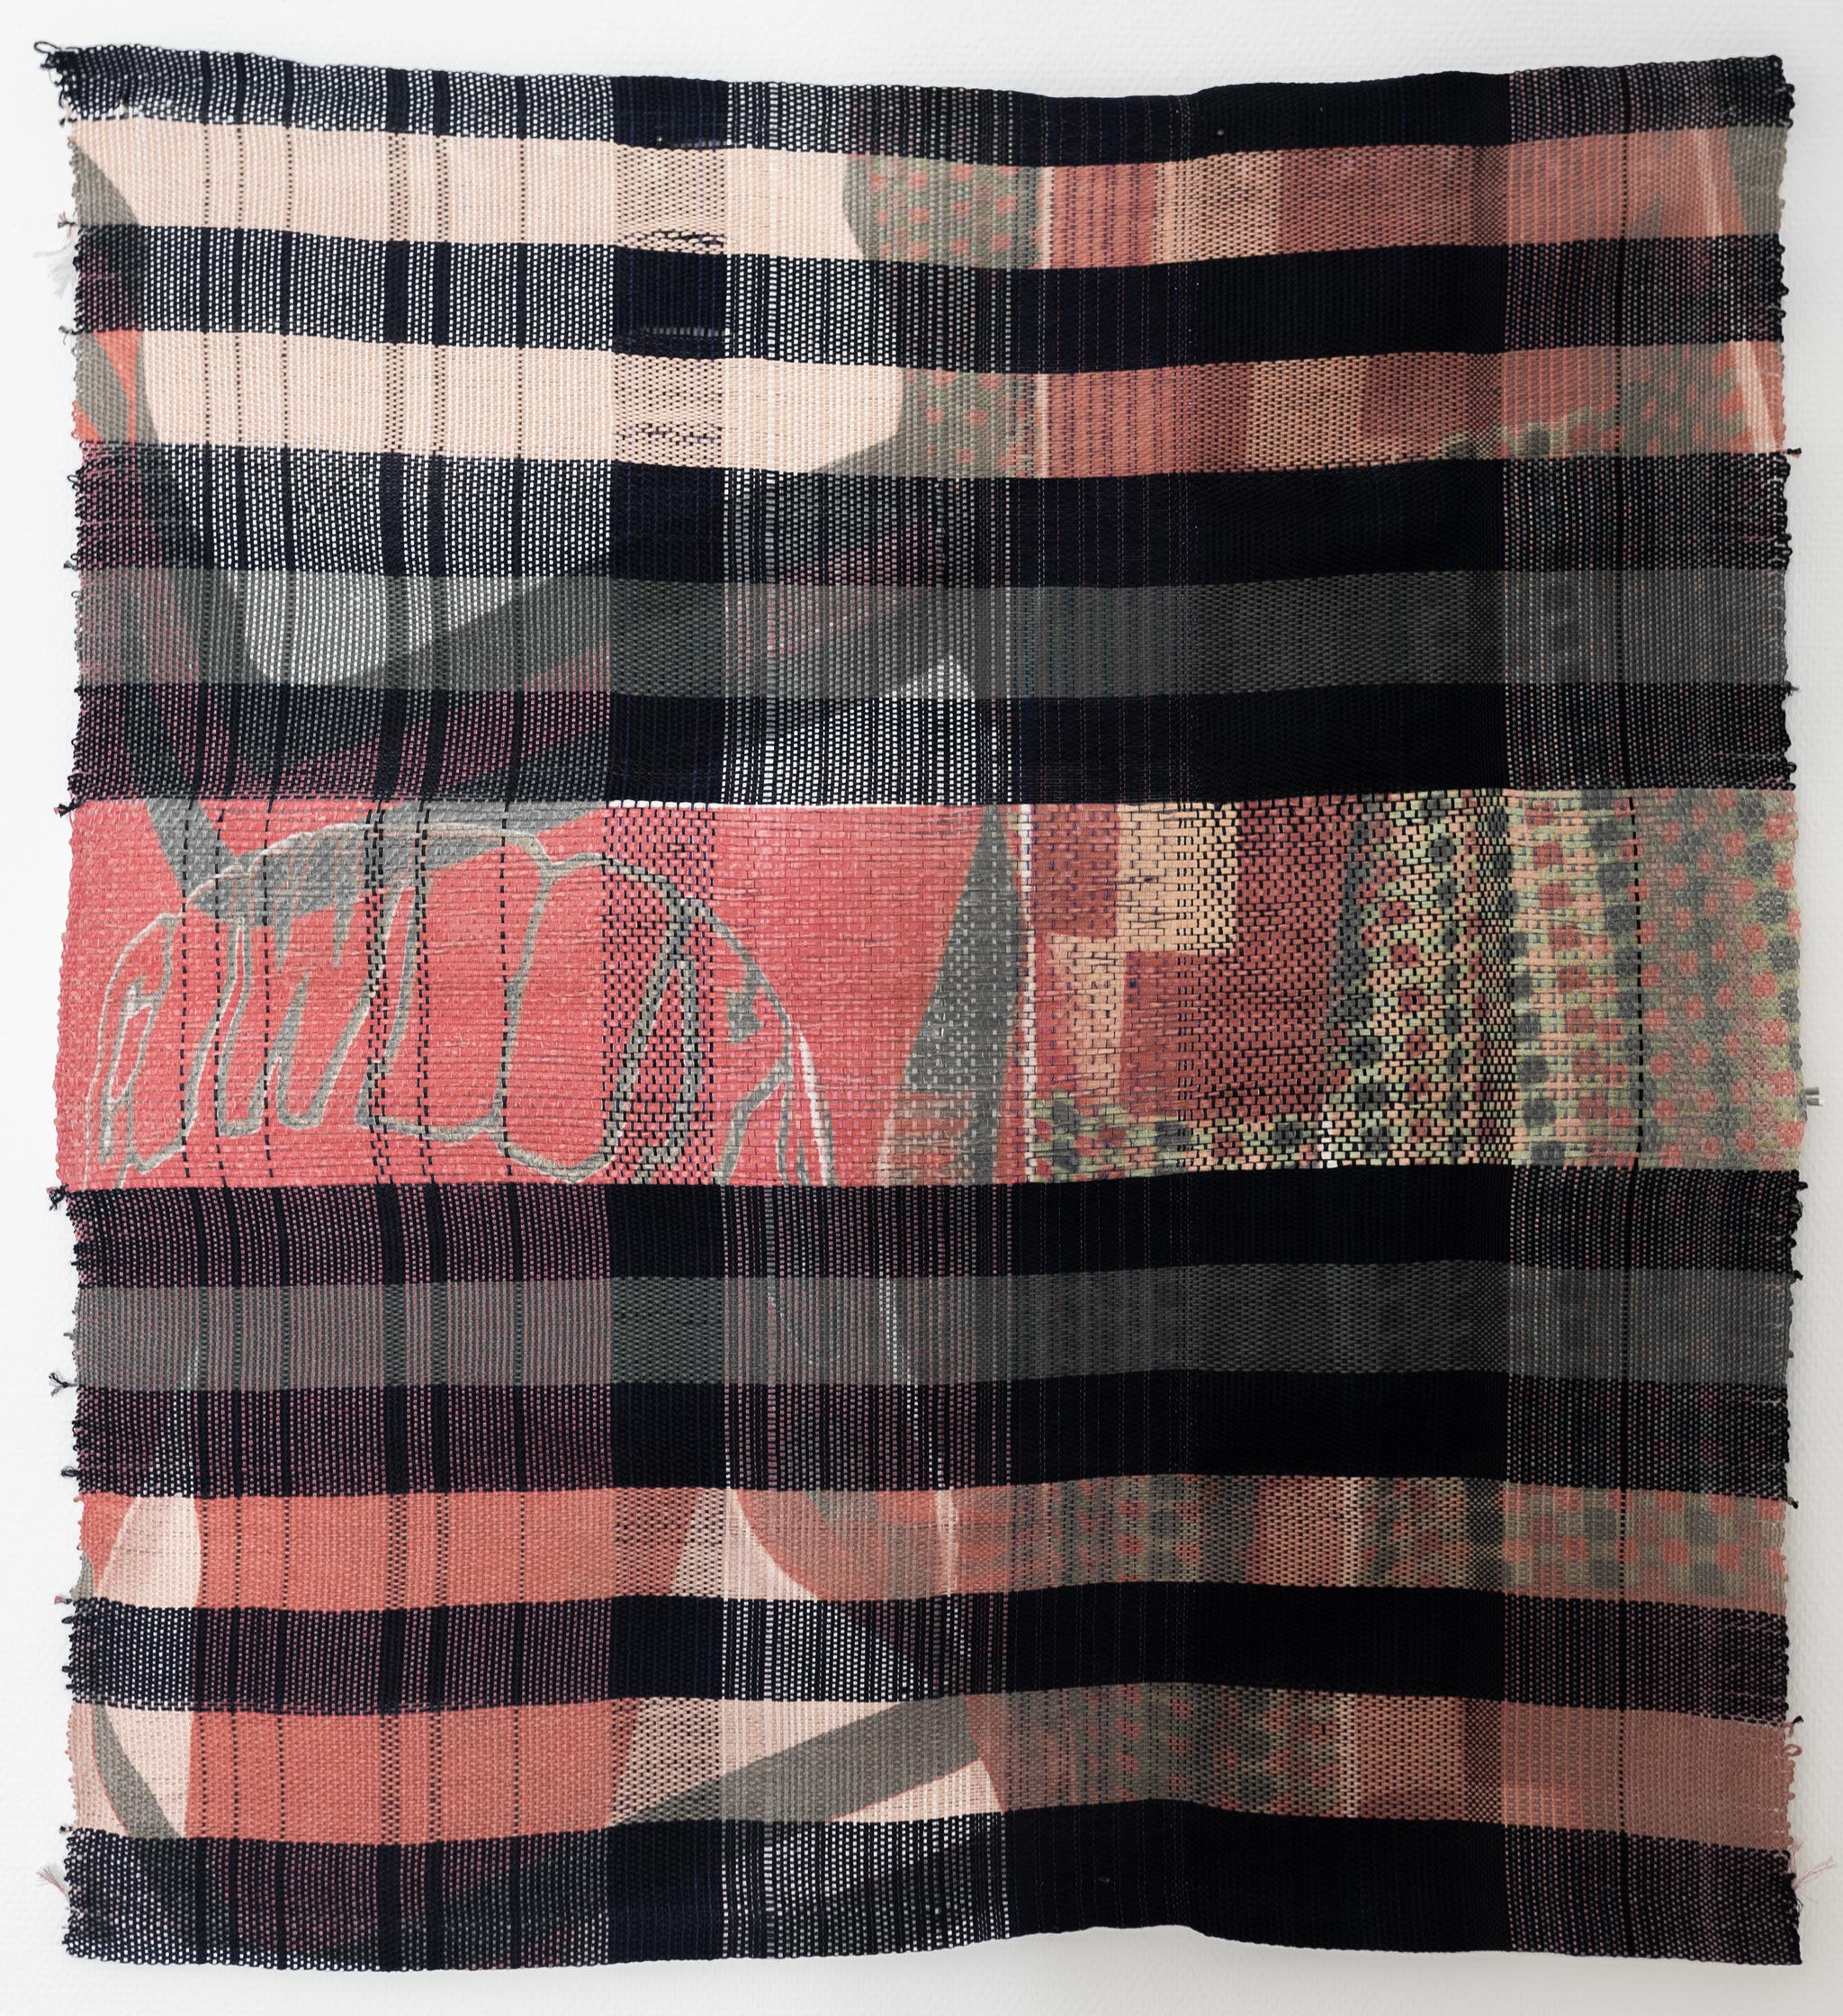 3. Marie Hazard - Wax Cowboy, 2018, hand-woven in paper, linen, mohair, digital print sublimation, 94 x 102 cm,